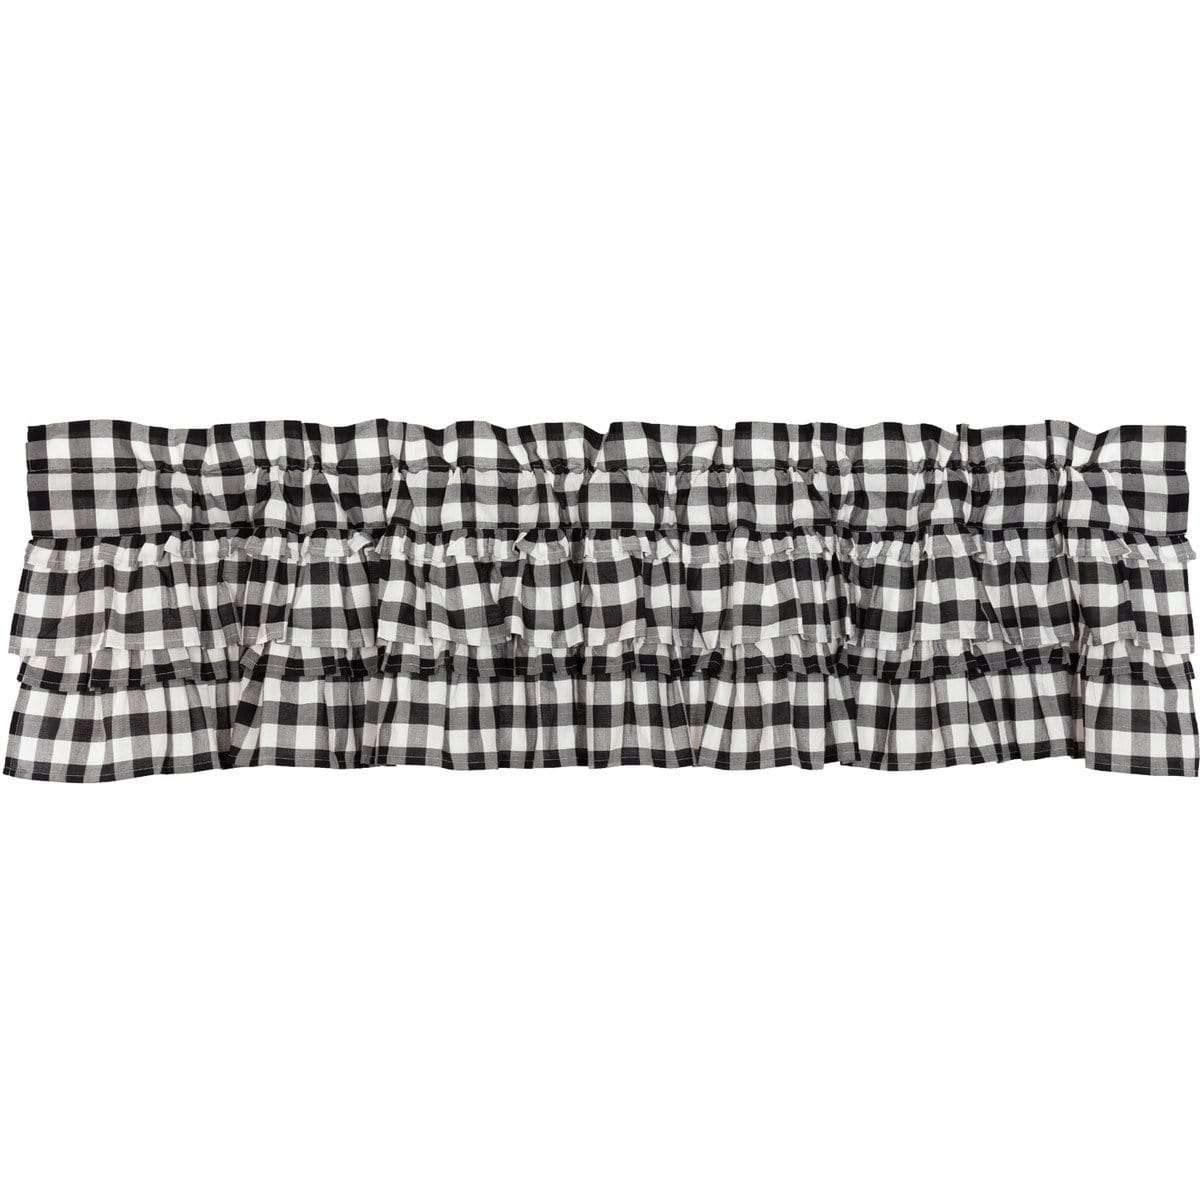 Annie Buffalo Black Check Ruffled Valance Curtain 16x72 VHC Brands - The Fox Decor